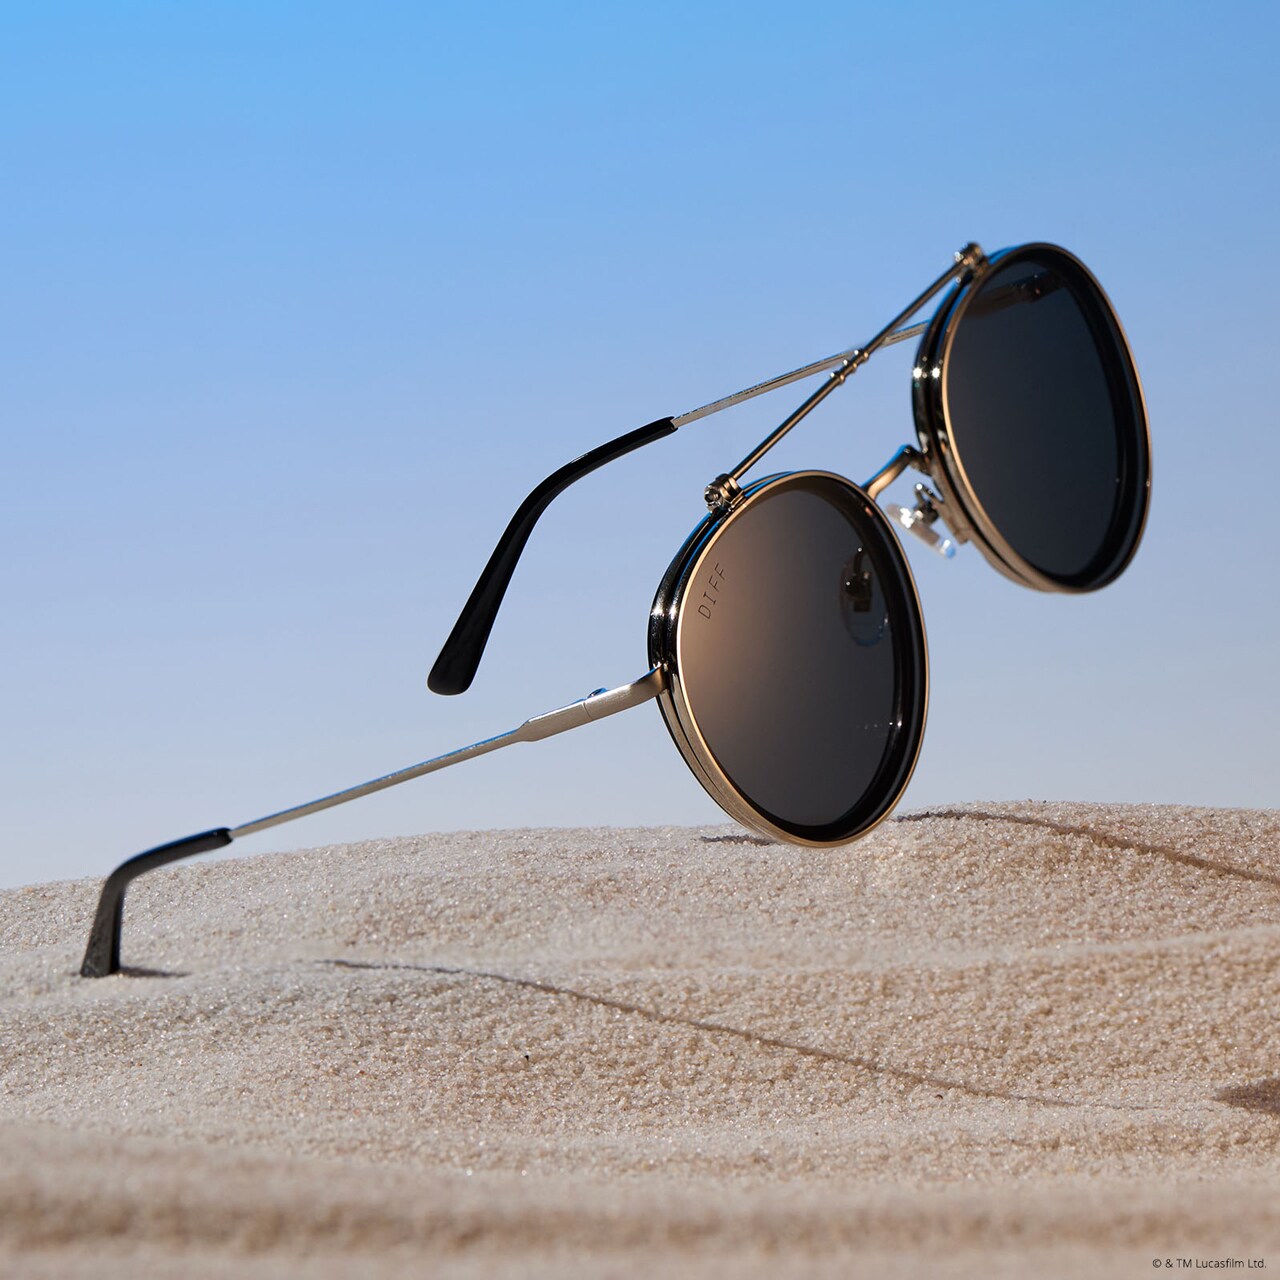 Anakin Podracer Sunglasses by DIFF Eyewear